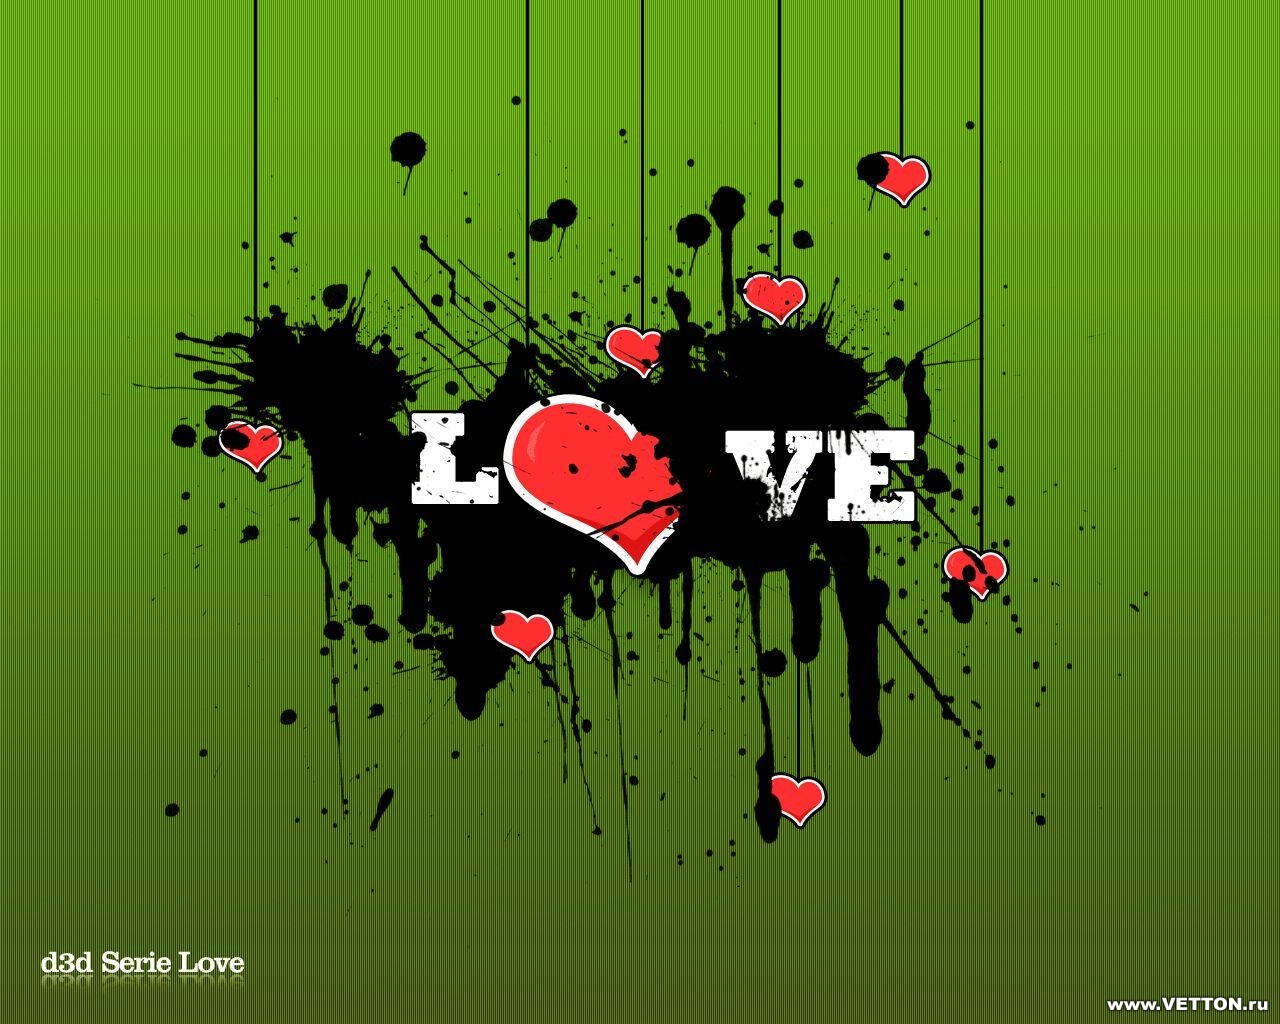 General 1280x1024 love artwork green background paint splatter heart (design)